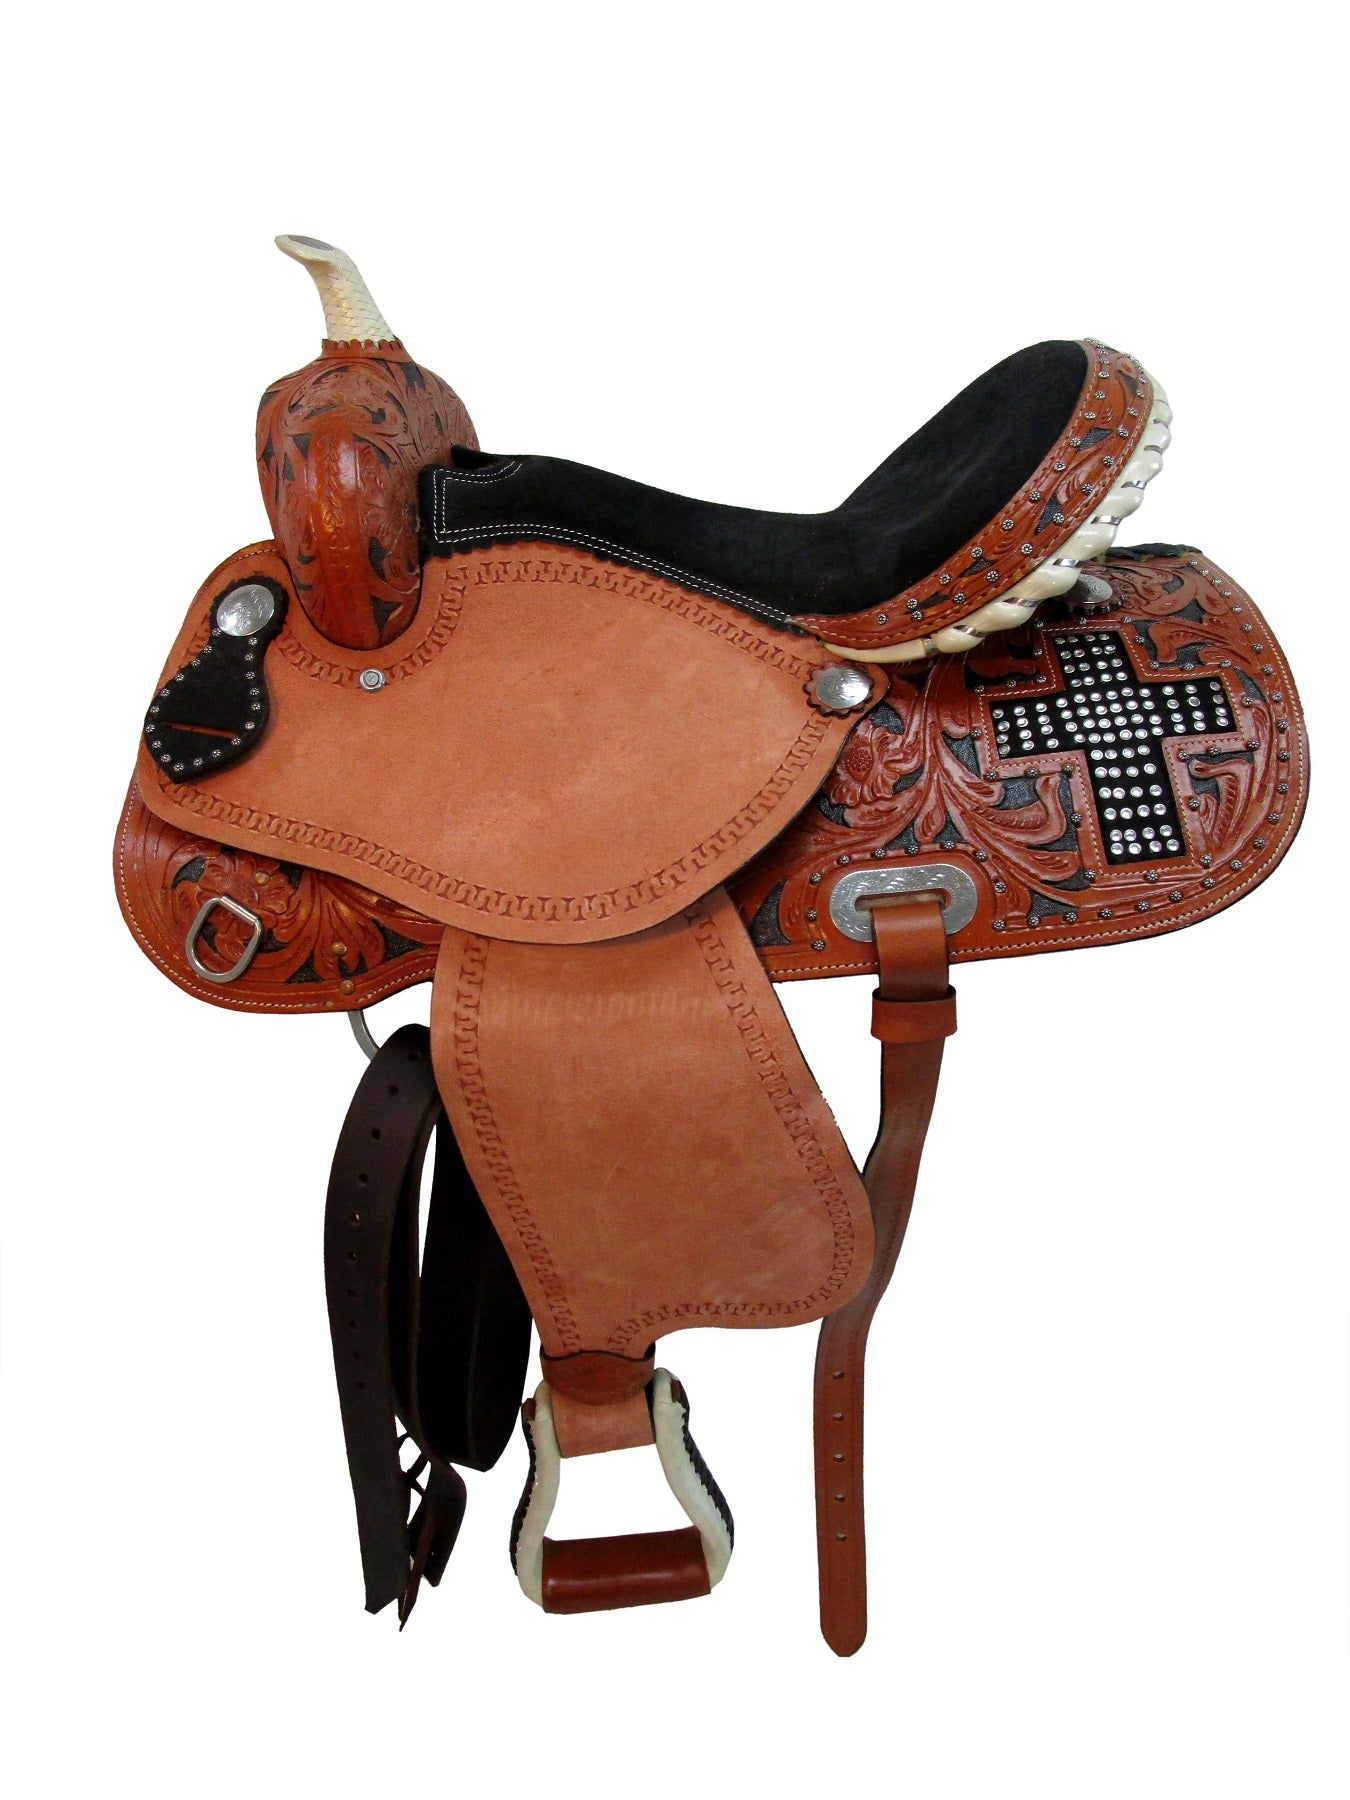 show saddle